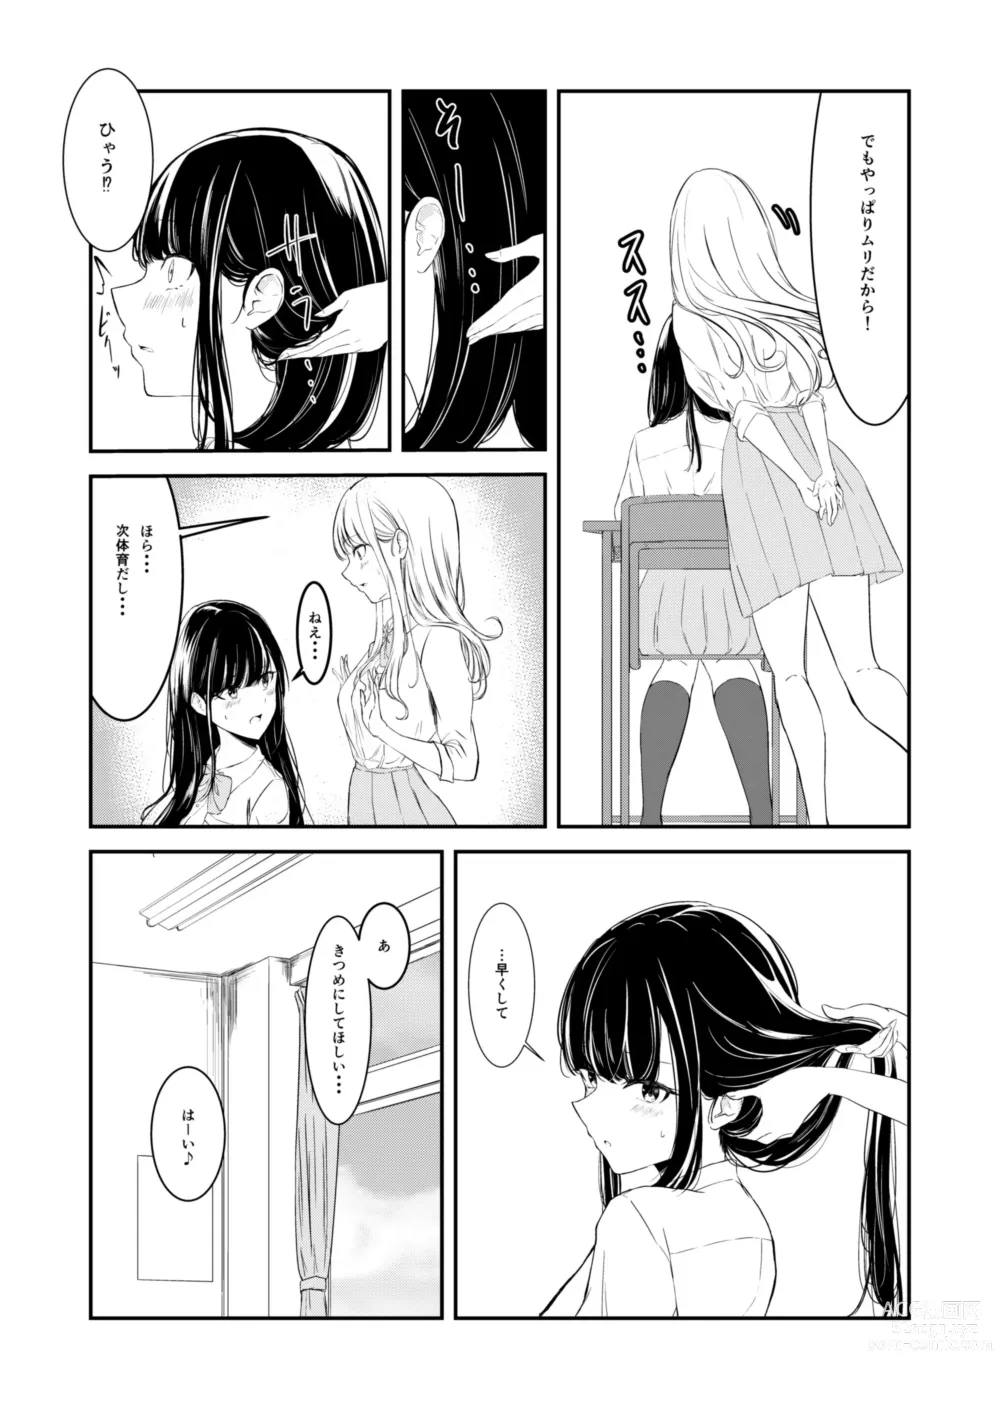 Page 8 of doujinshi Yuri comic Part 1,2 and 3.